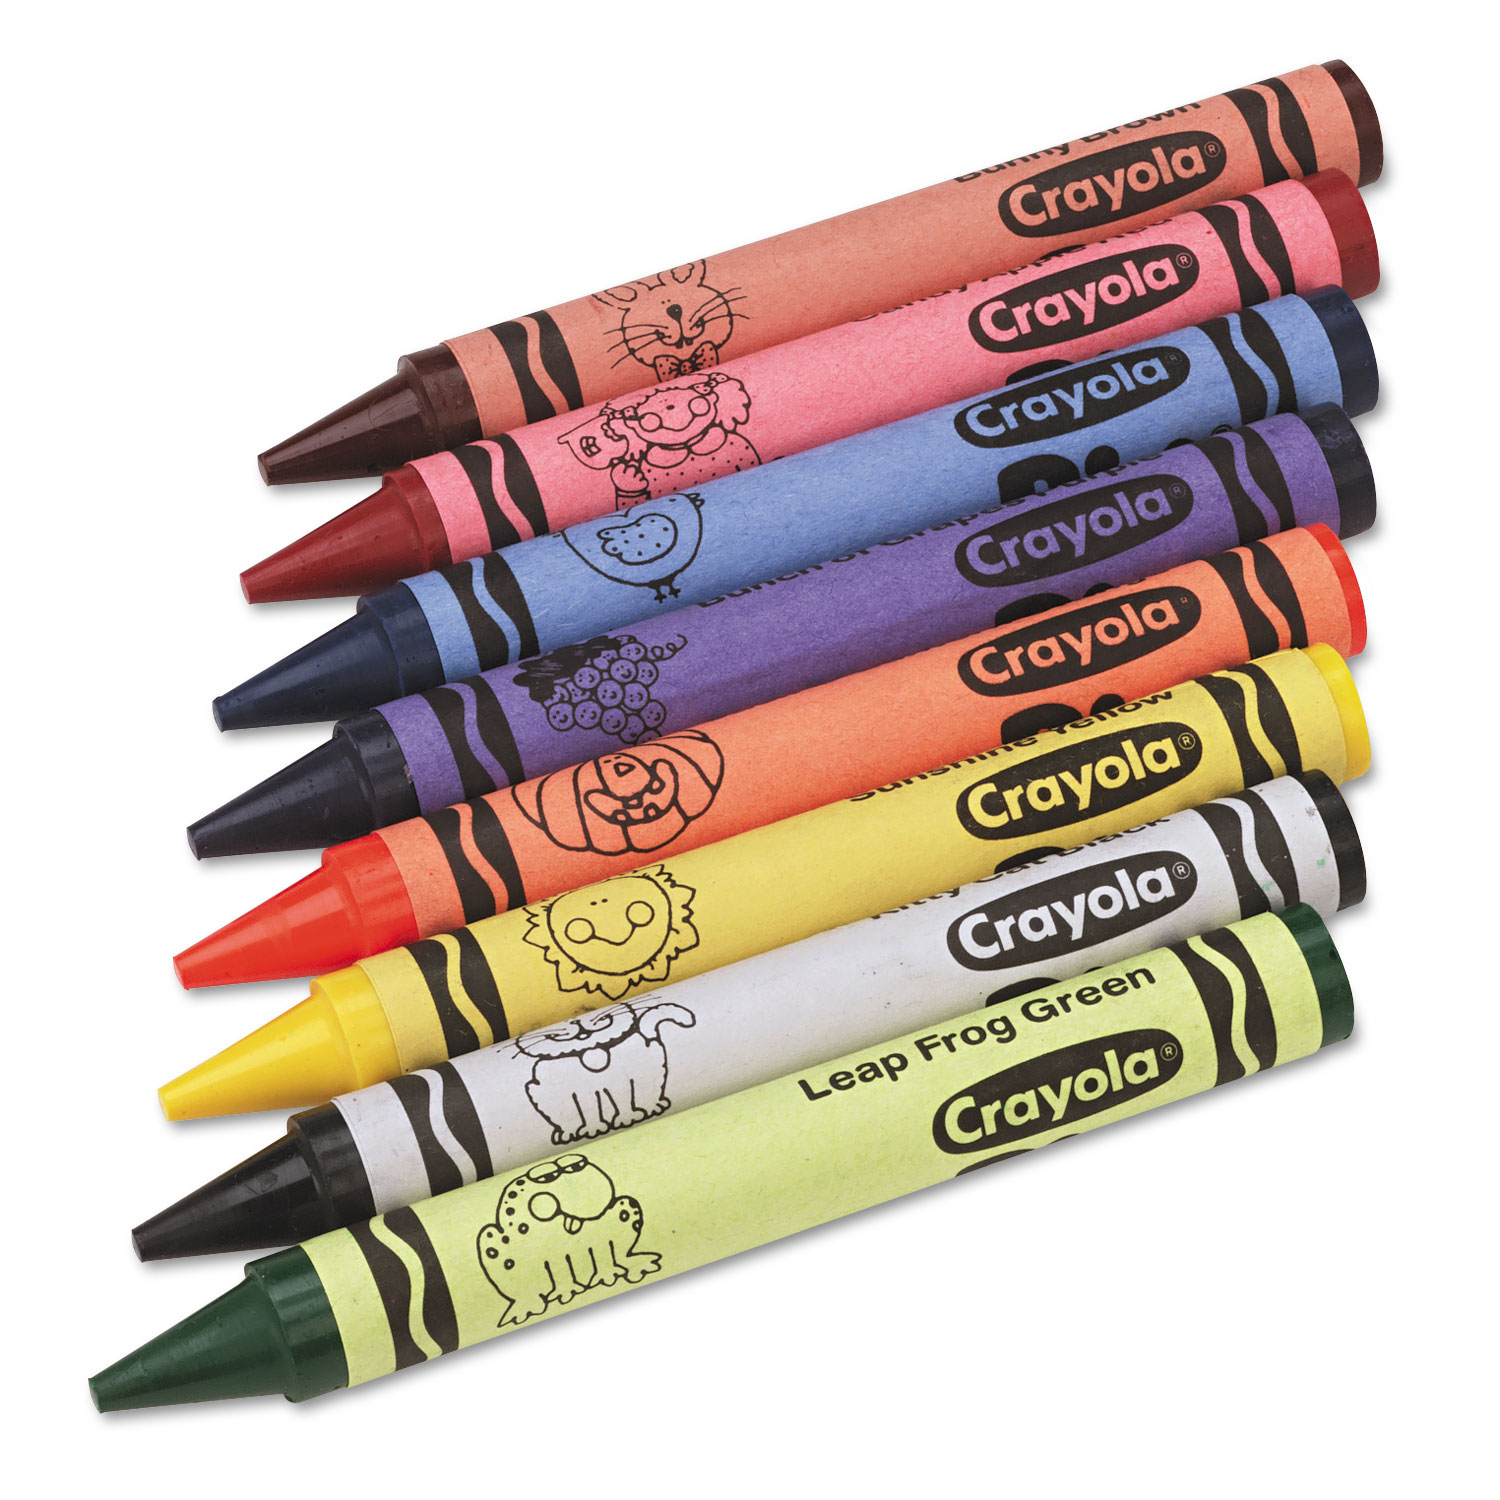 Jumbo Classpack Crayons, 25 Each of 8 Colors, 200/Set - mastersupplyonline